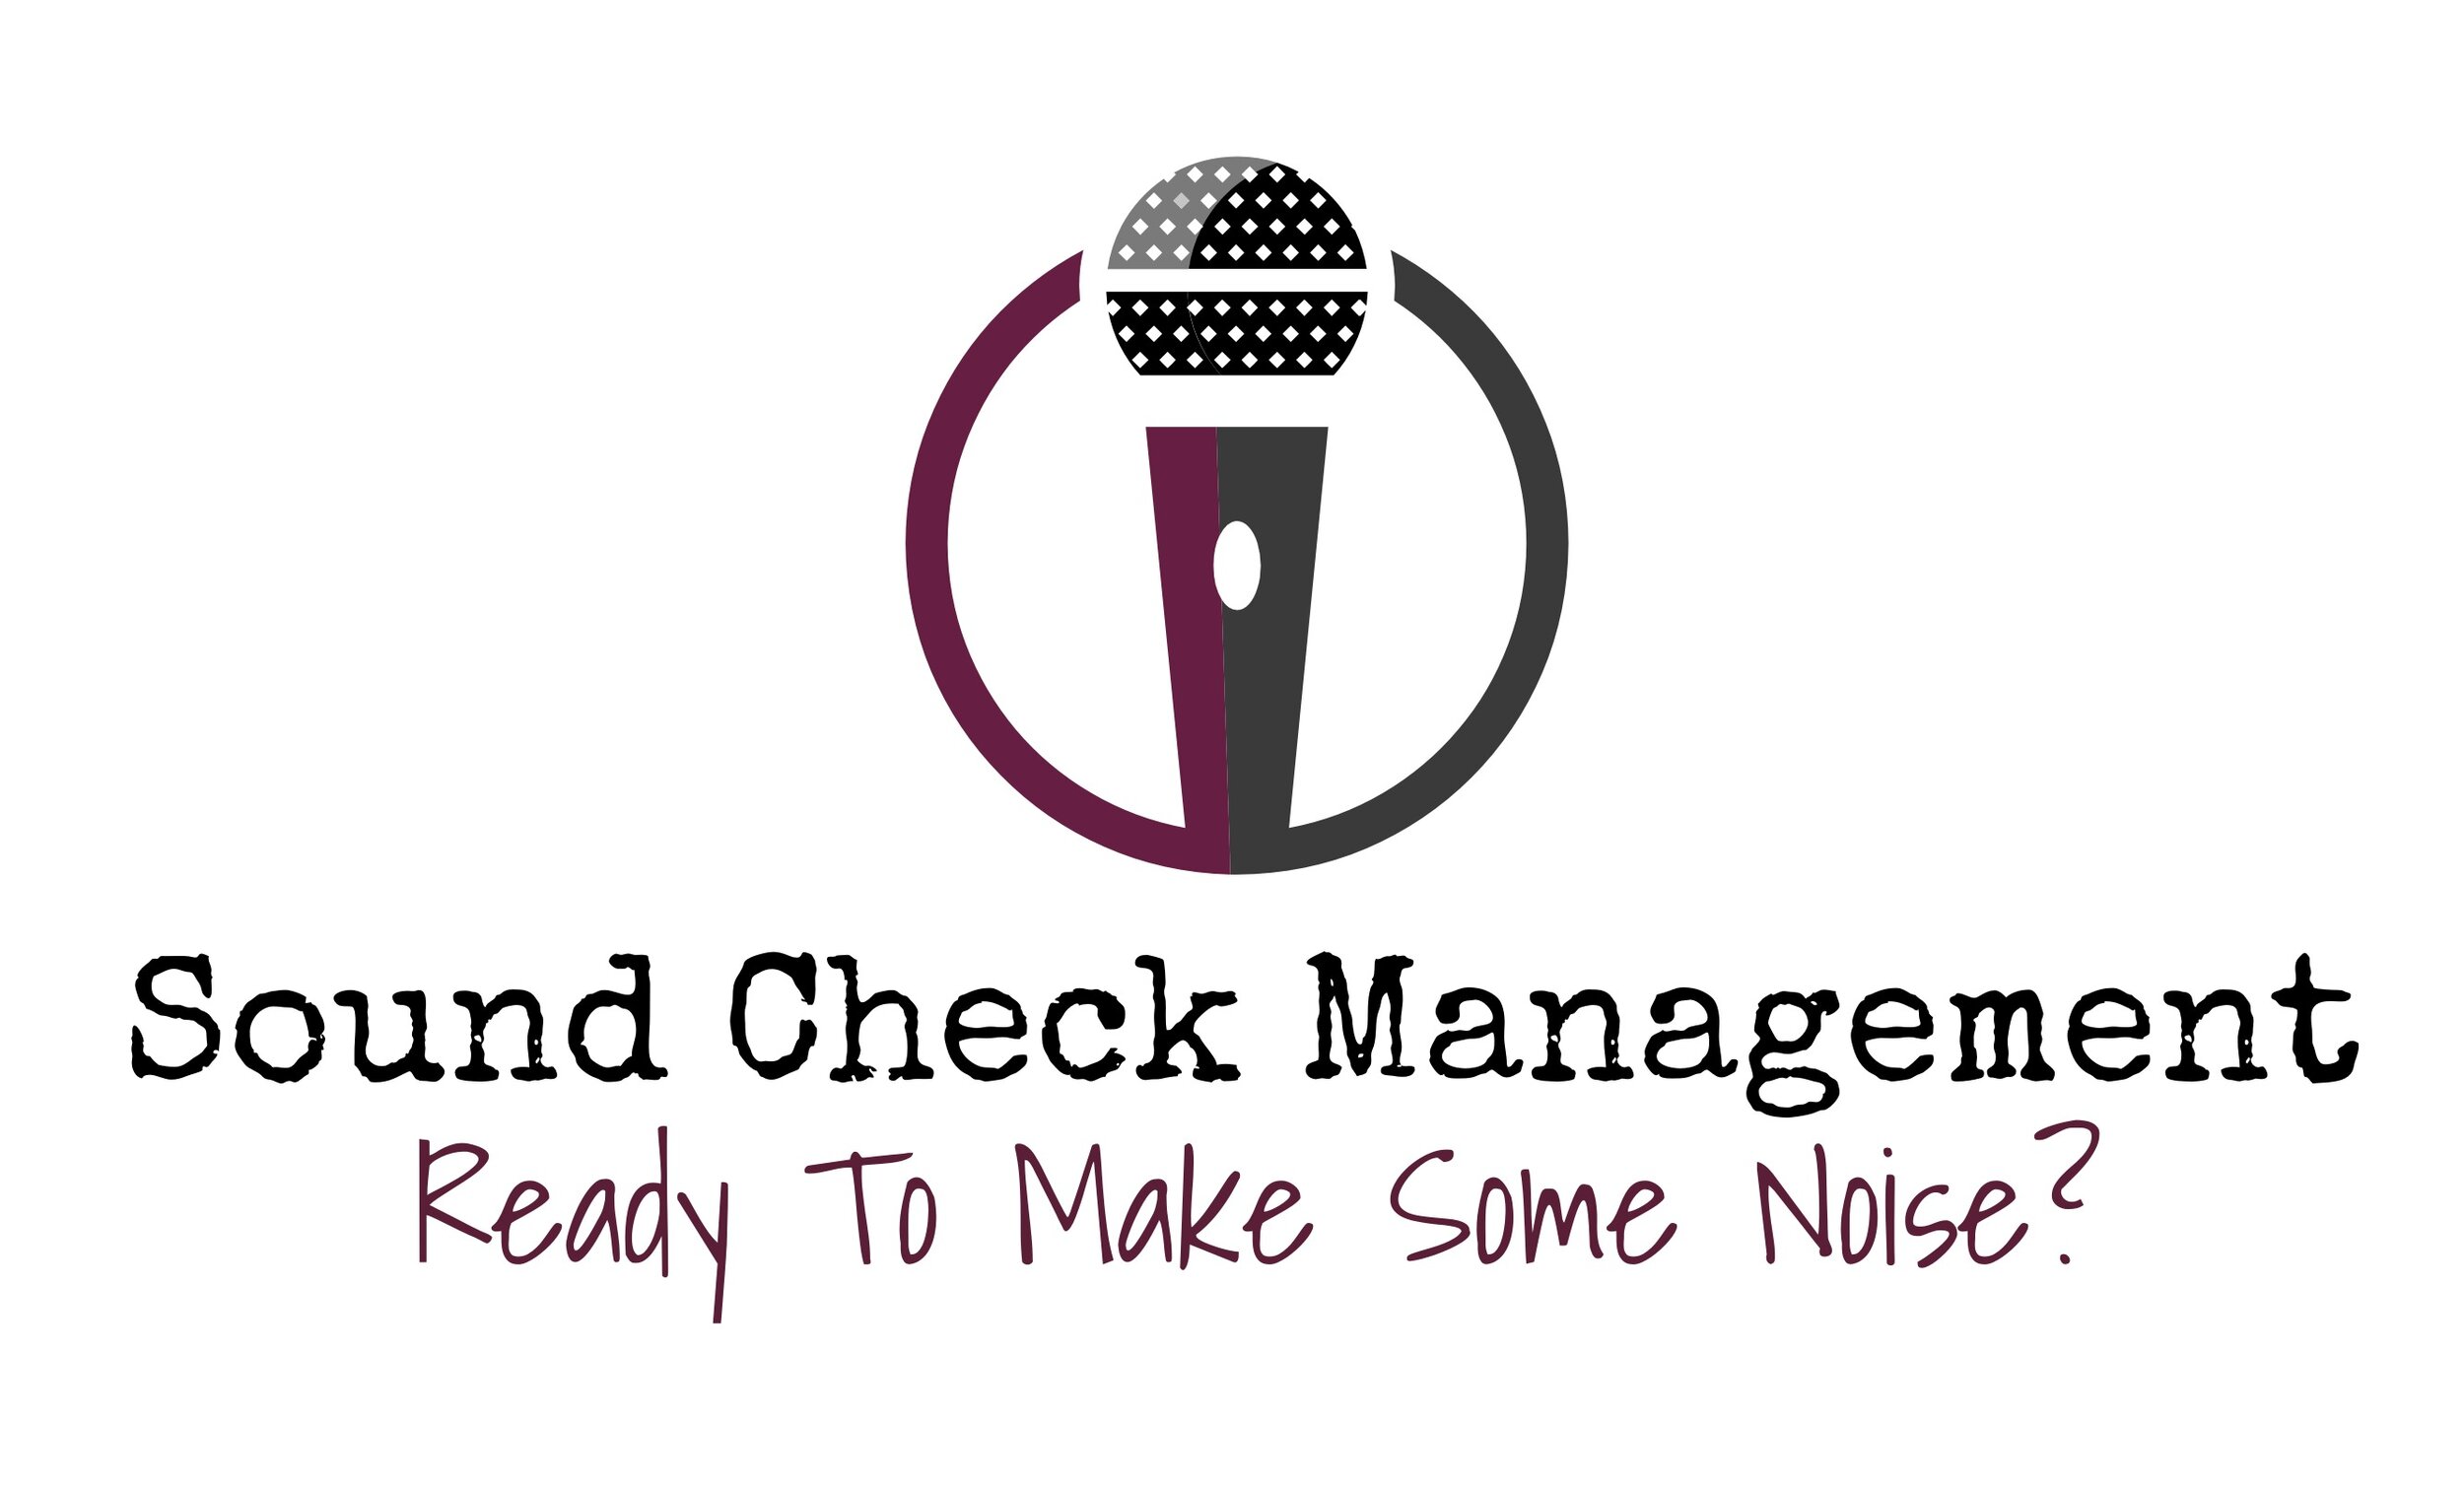 Sound Check Management